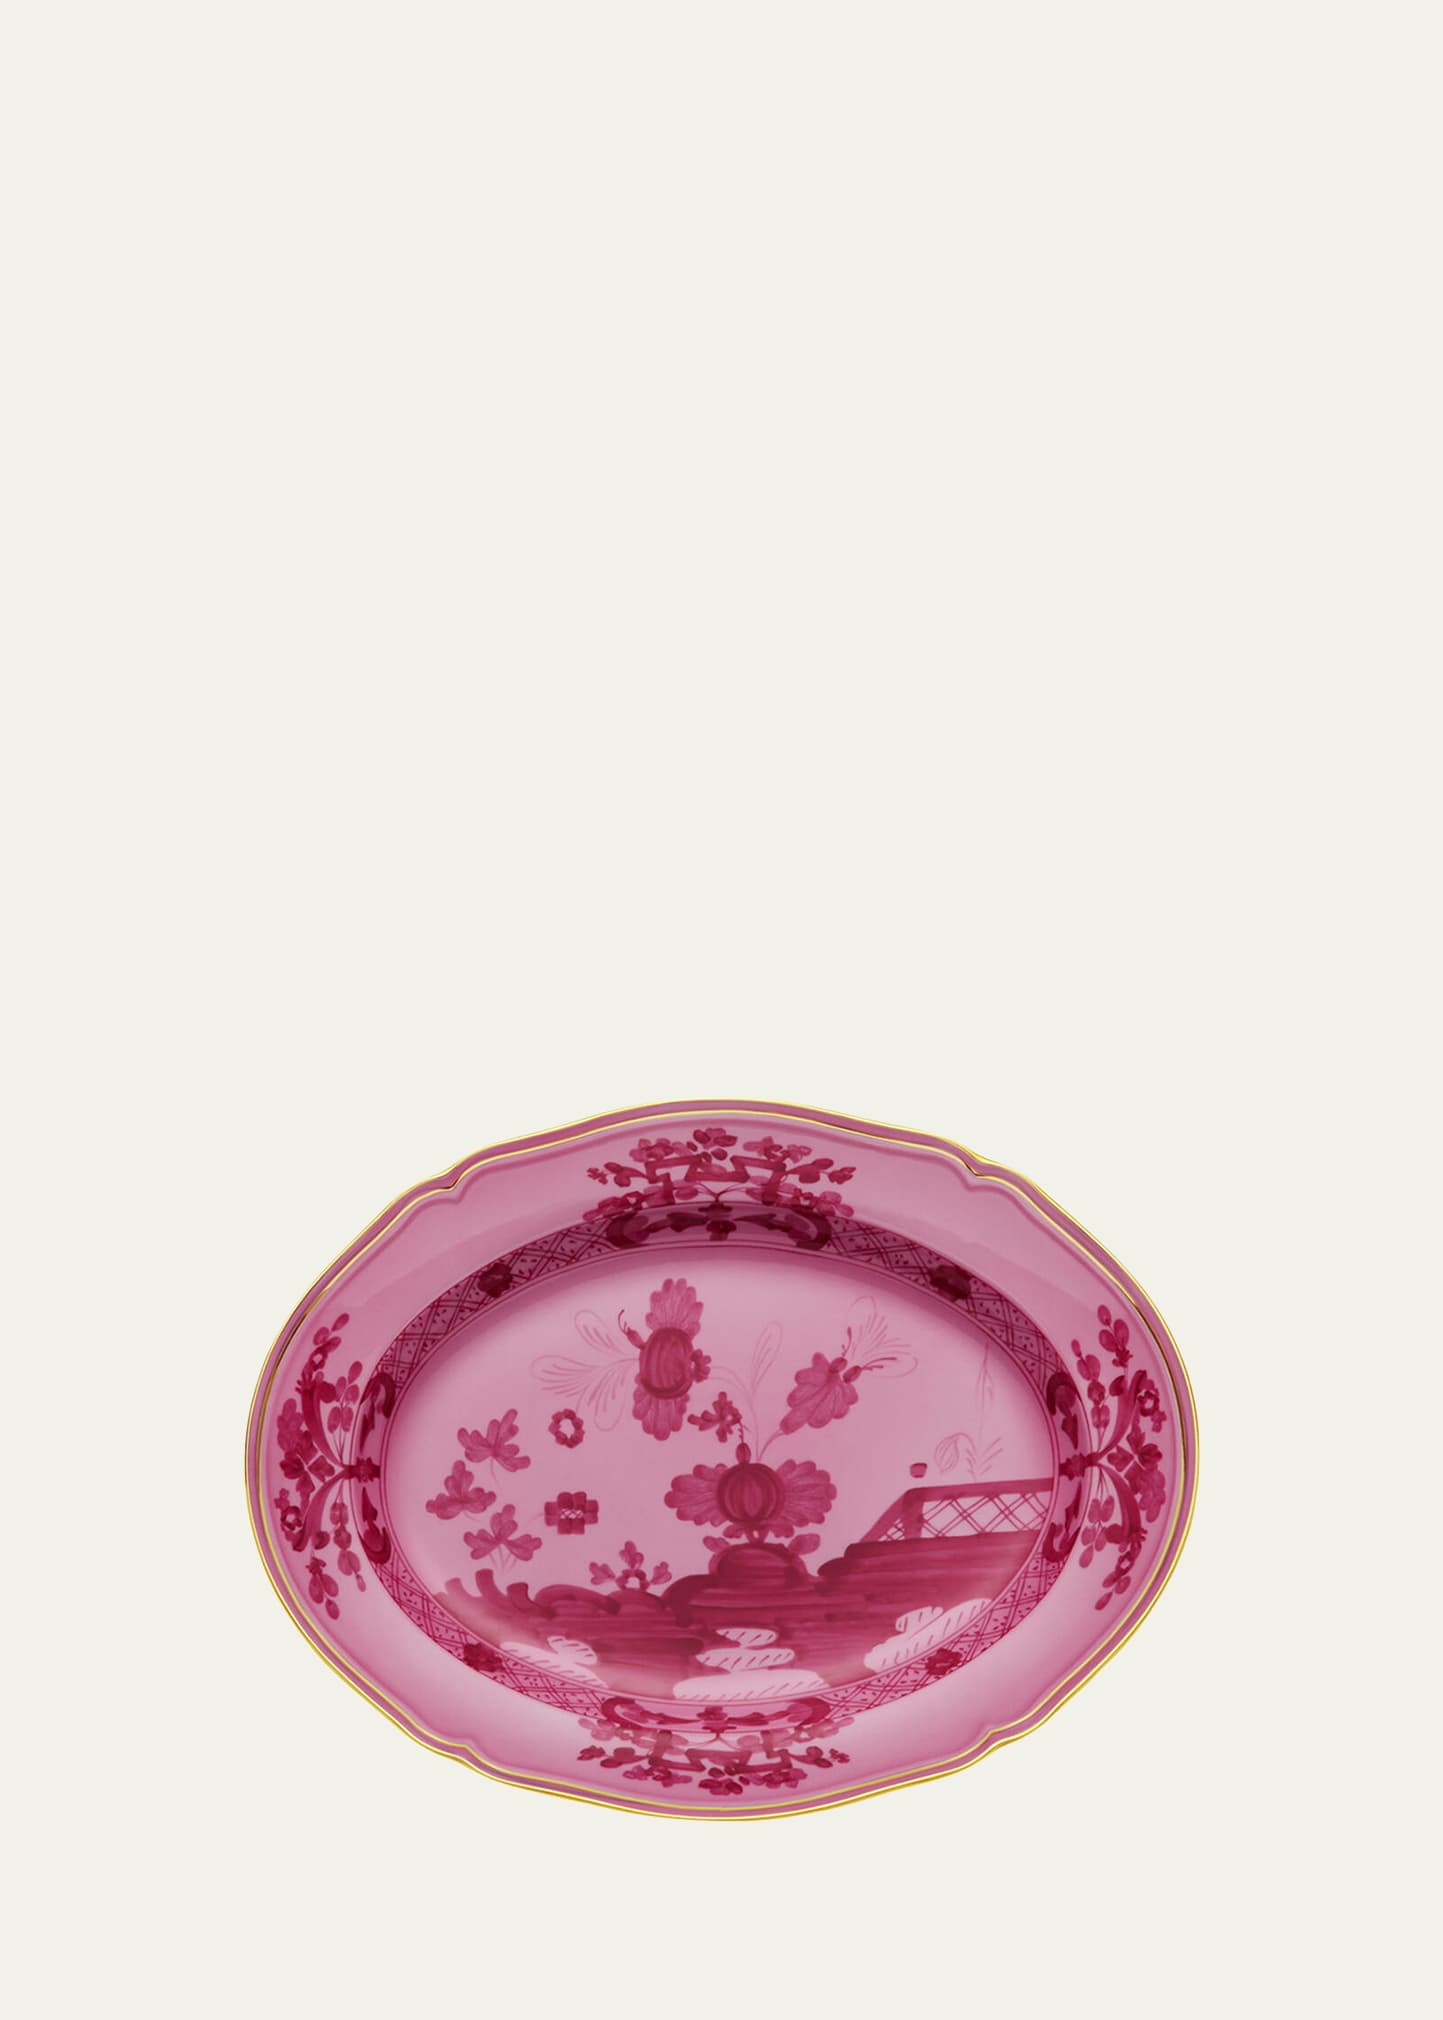 Shop Ginori 1735 Oriente Italiano Large Oval Platter